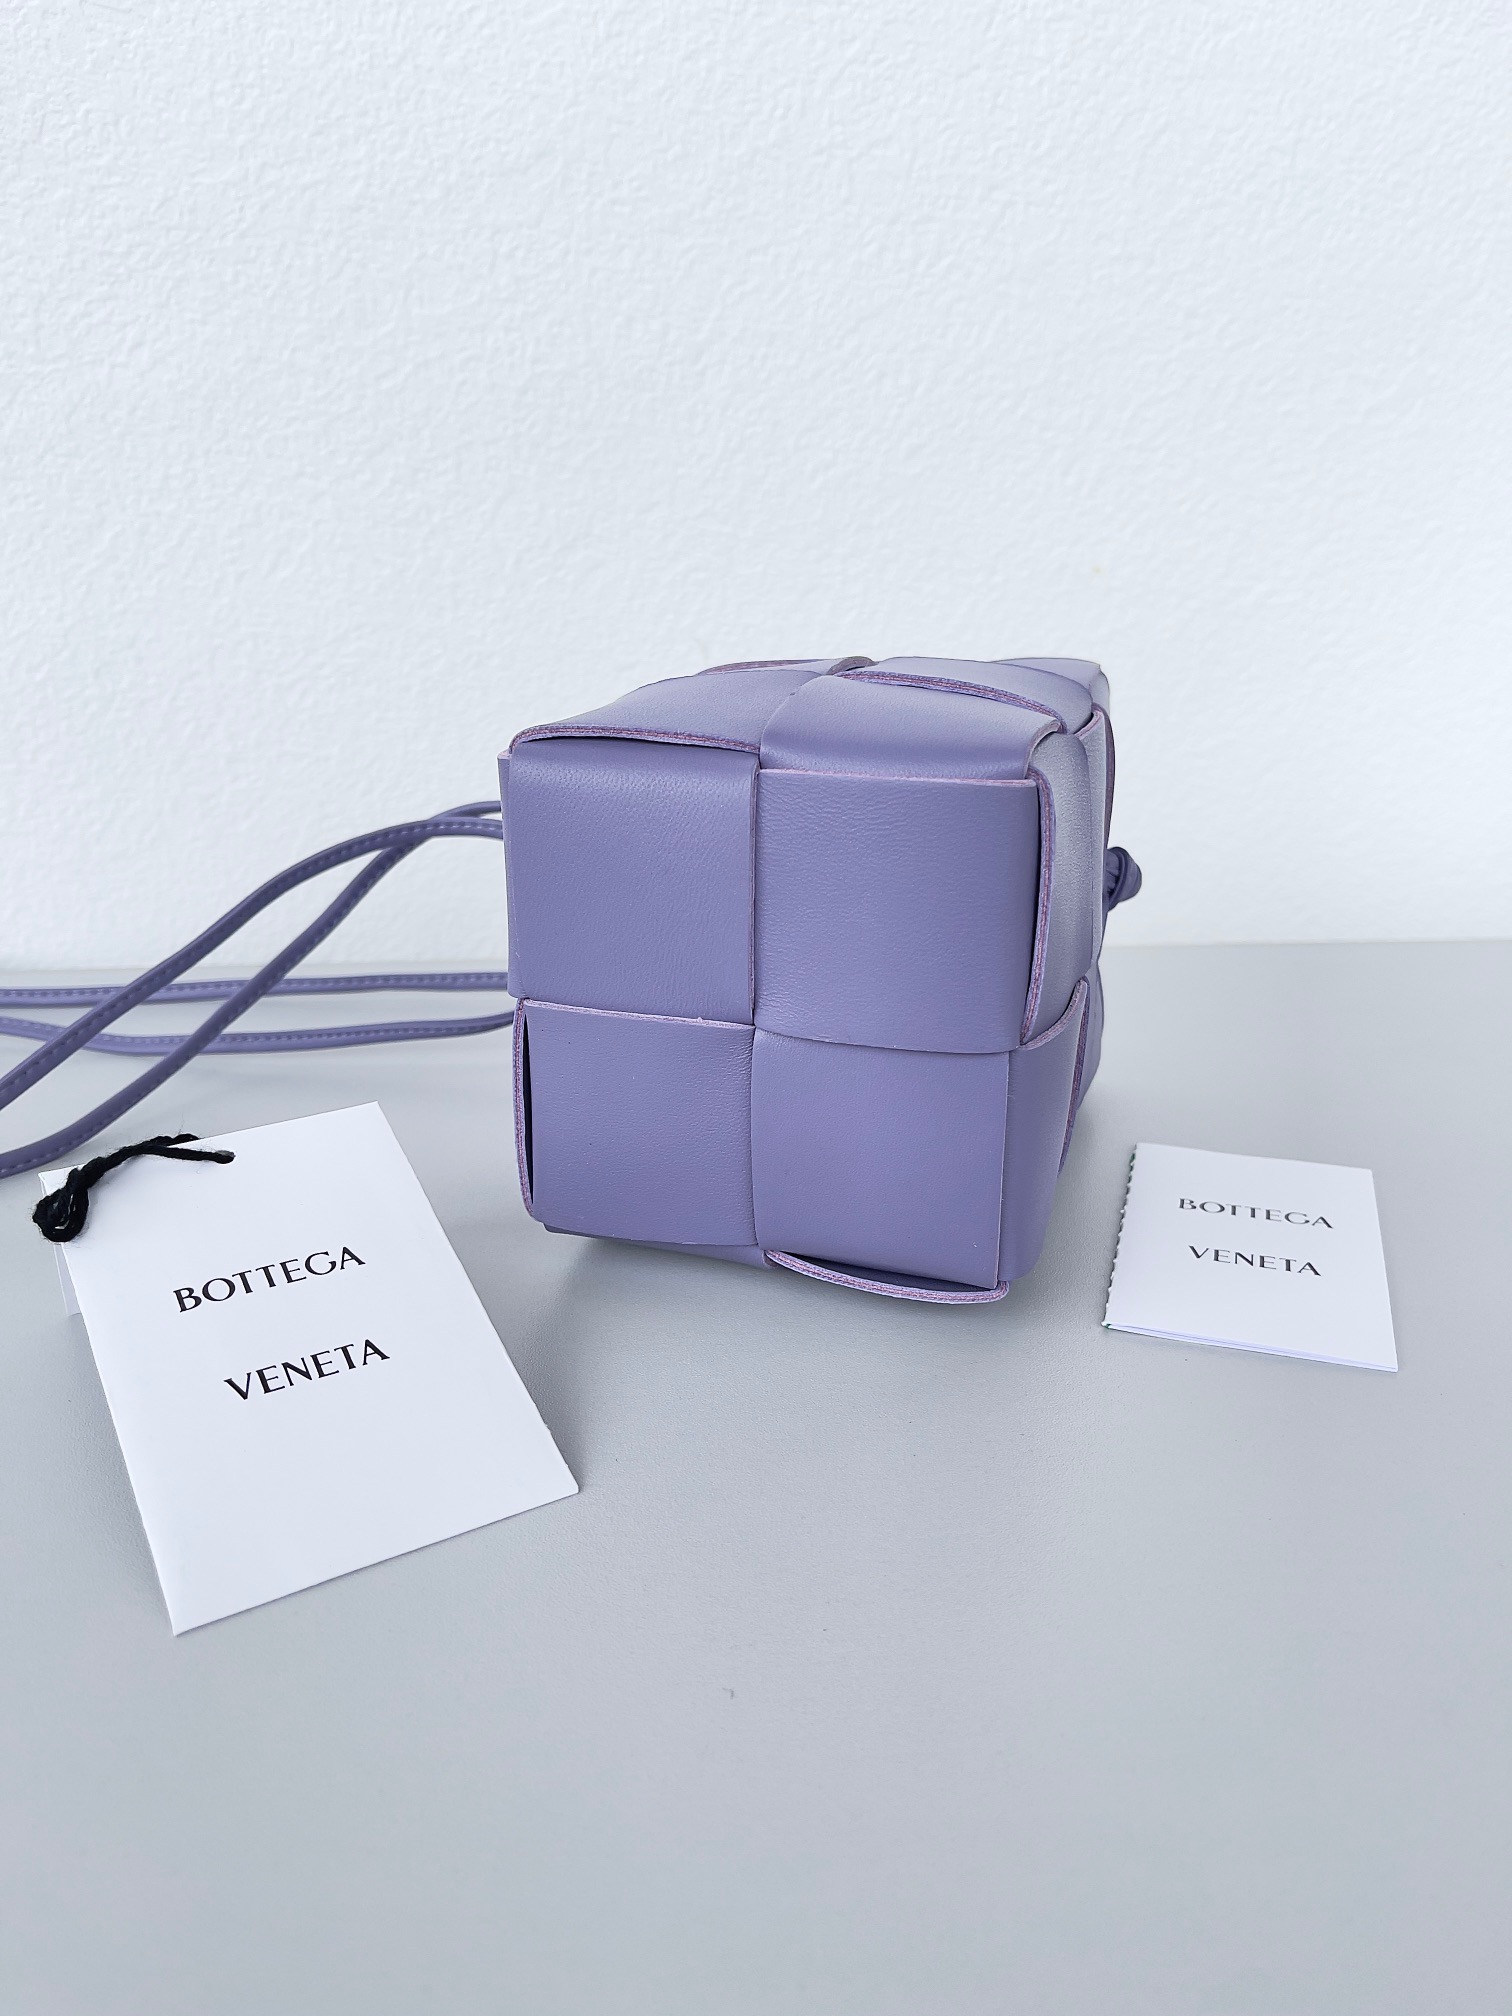 Bv 新款Cassette 水桶包 小号 水桶包大方格的设计 经典的编织元素 14cm 紫藤色